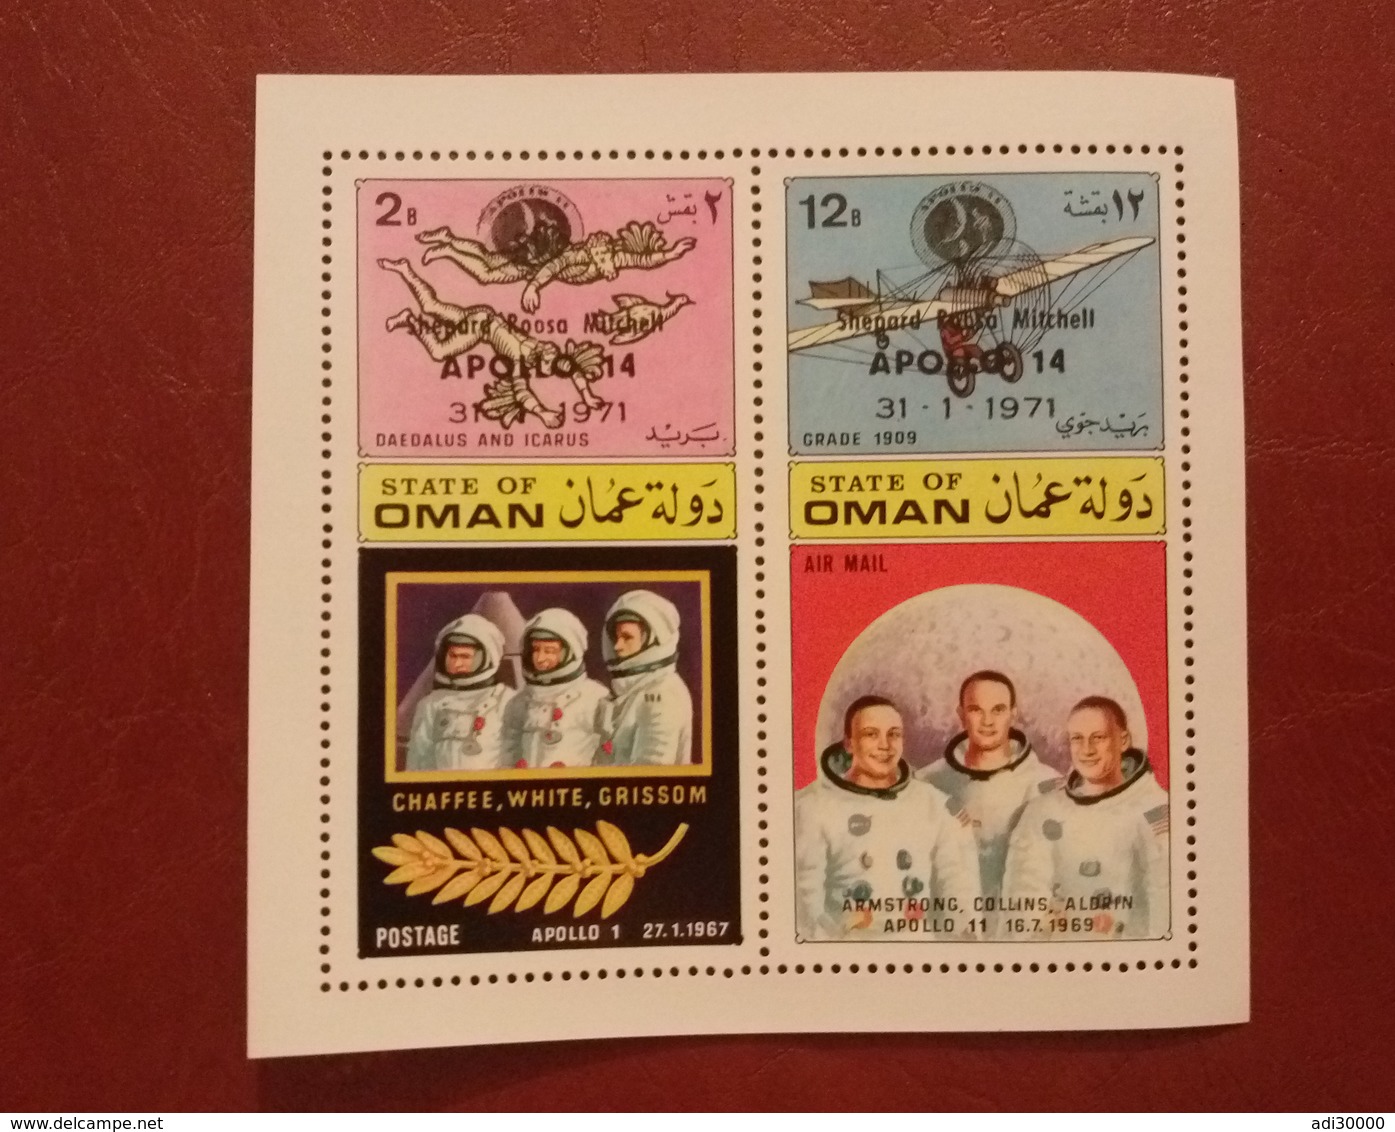 State Of Oman 1971 - Space Apollo 14 Ovp Single Sheet Perf Deluxe (71.02.11)- Cosmos Moon Landing Astronauts Rocket Rare - Oman